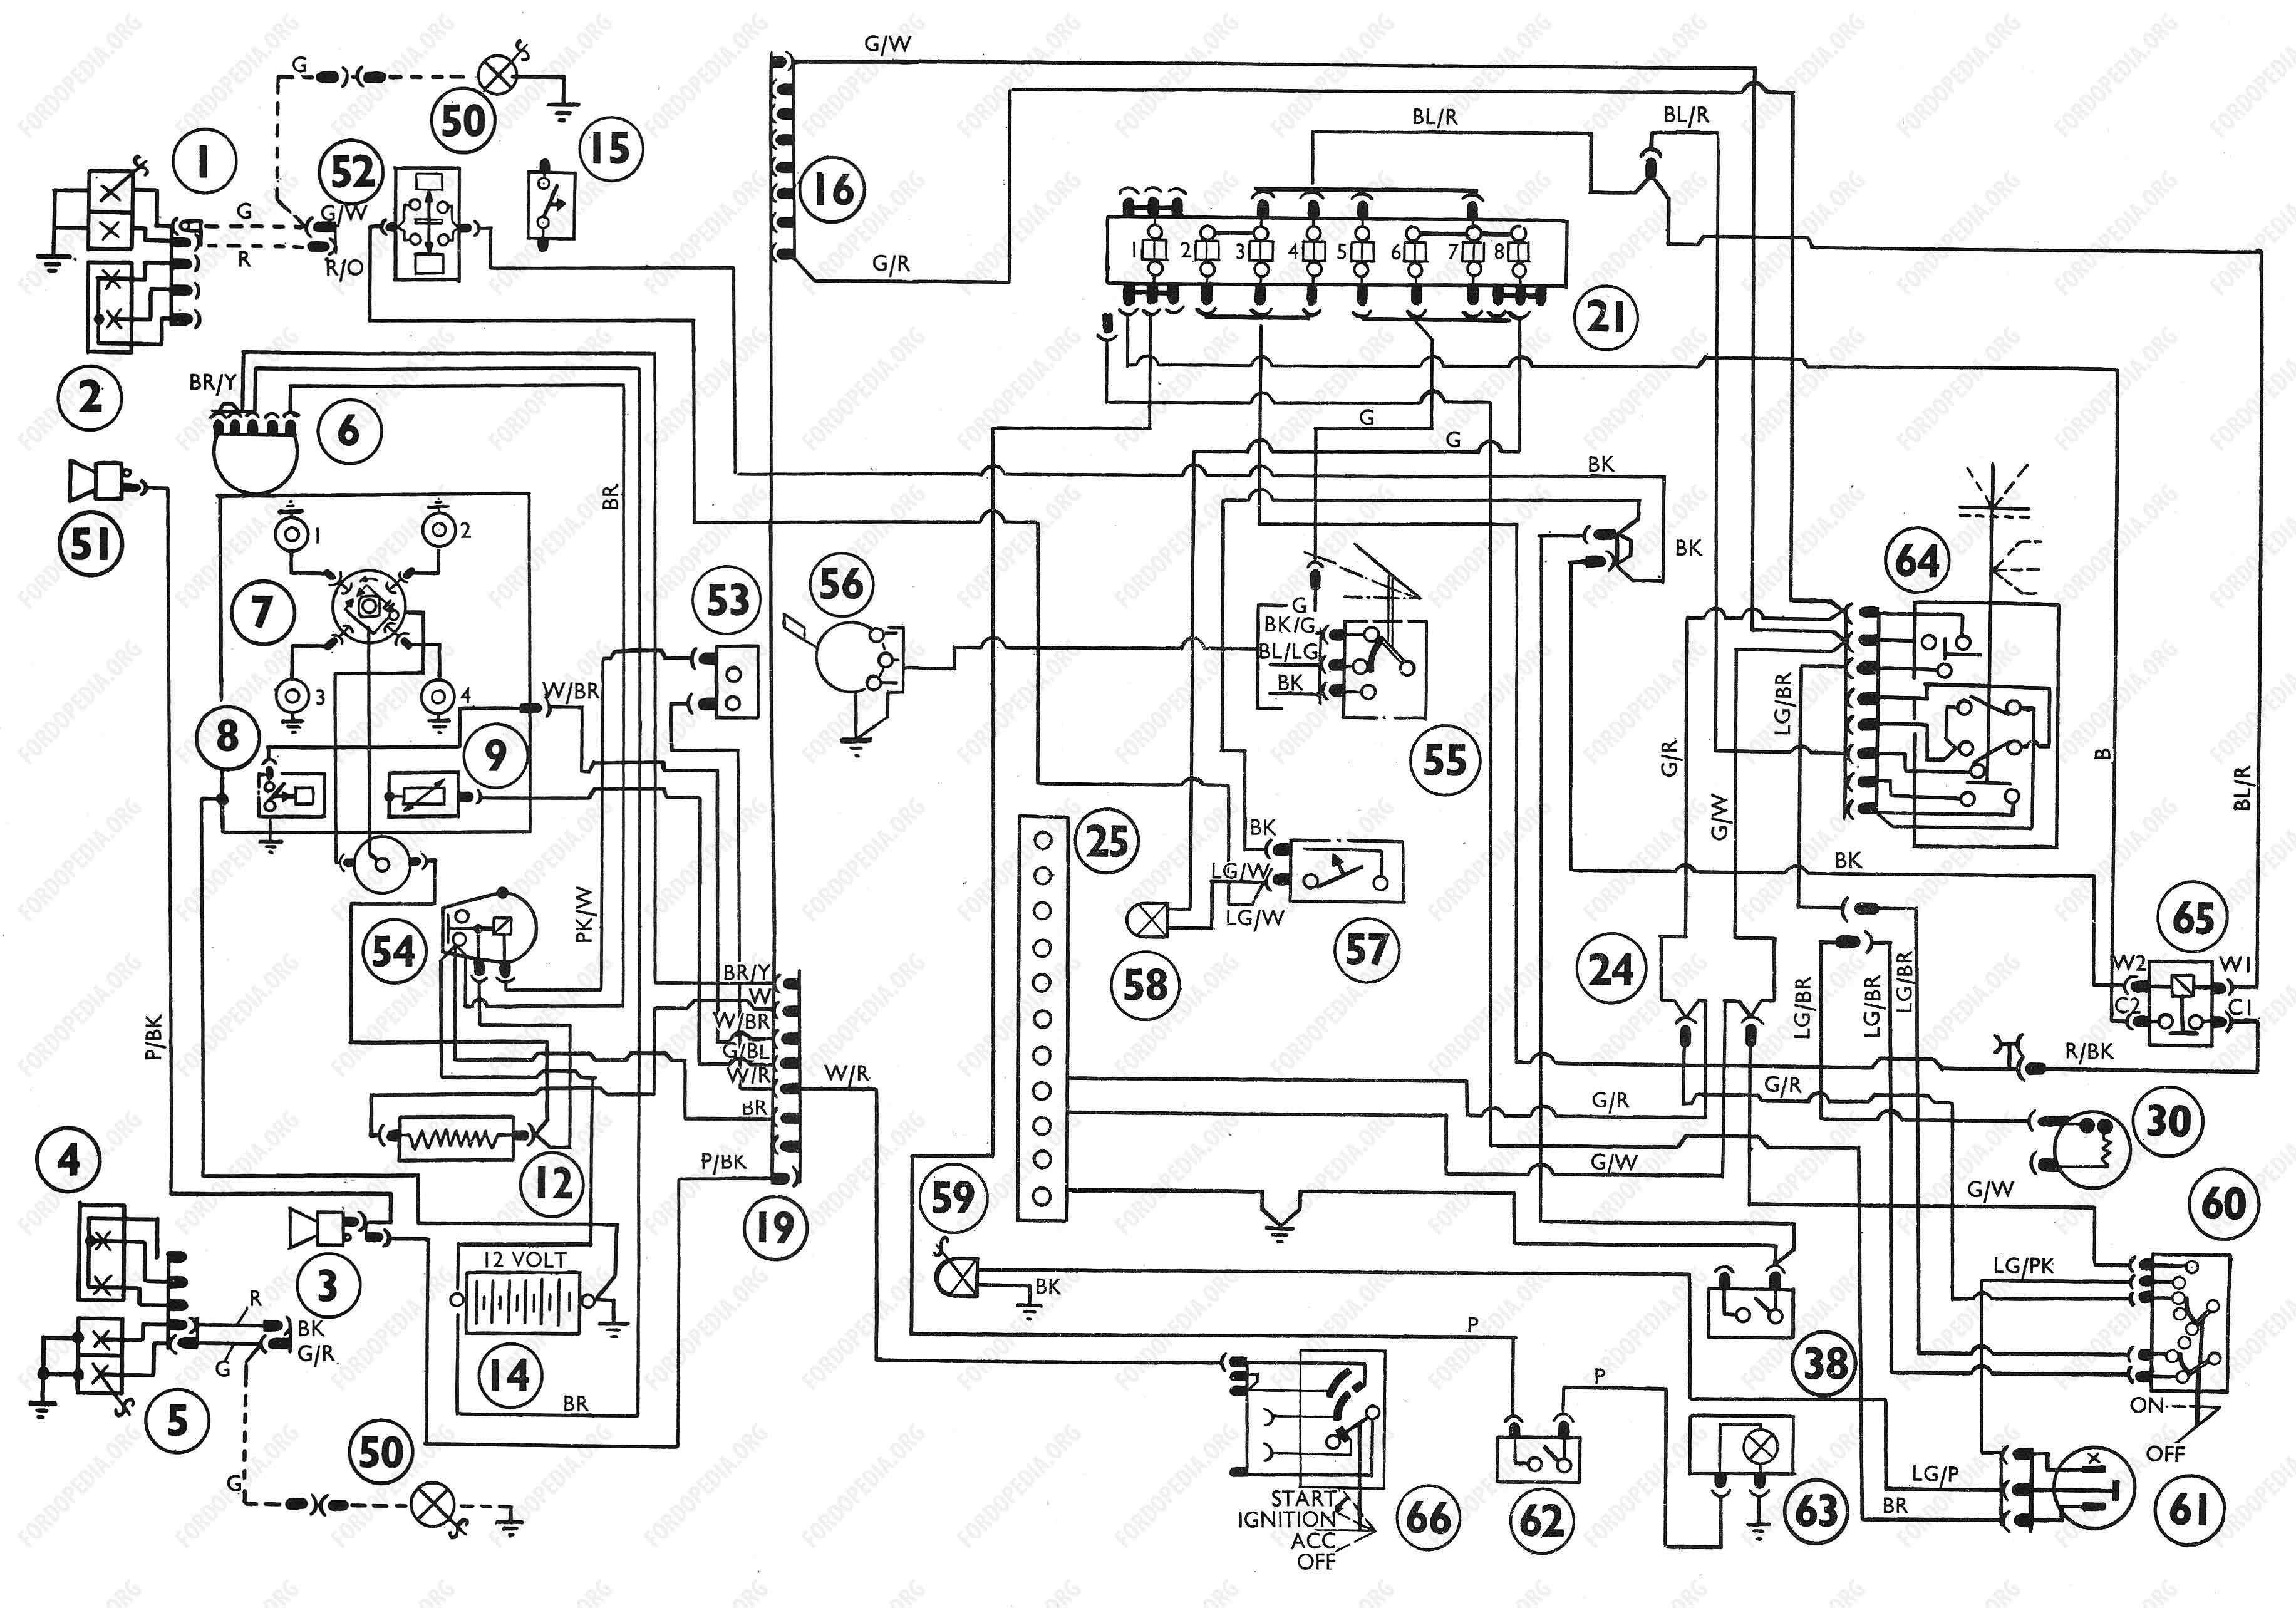 Ford Bus Manuals Wiring Diagrams Pdf